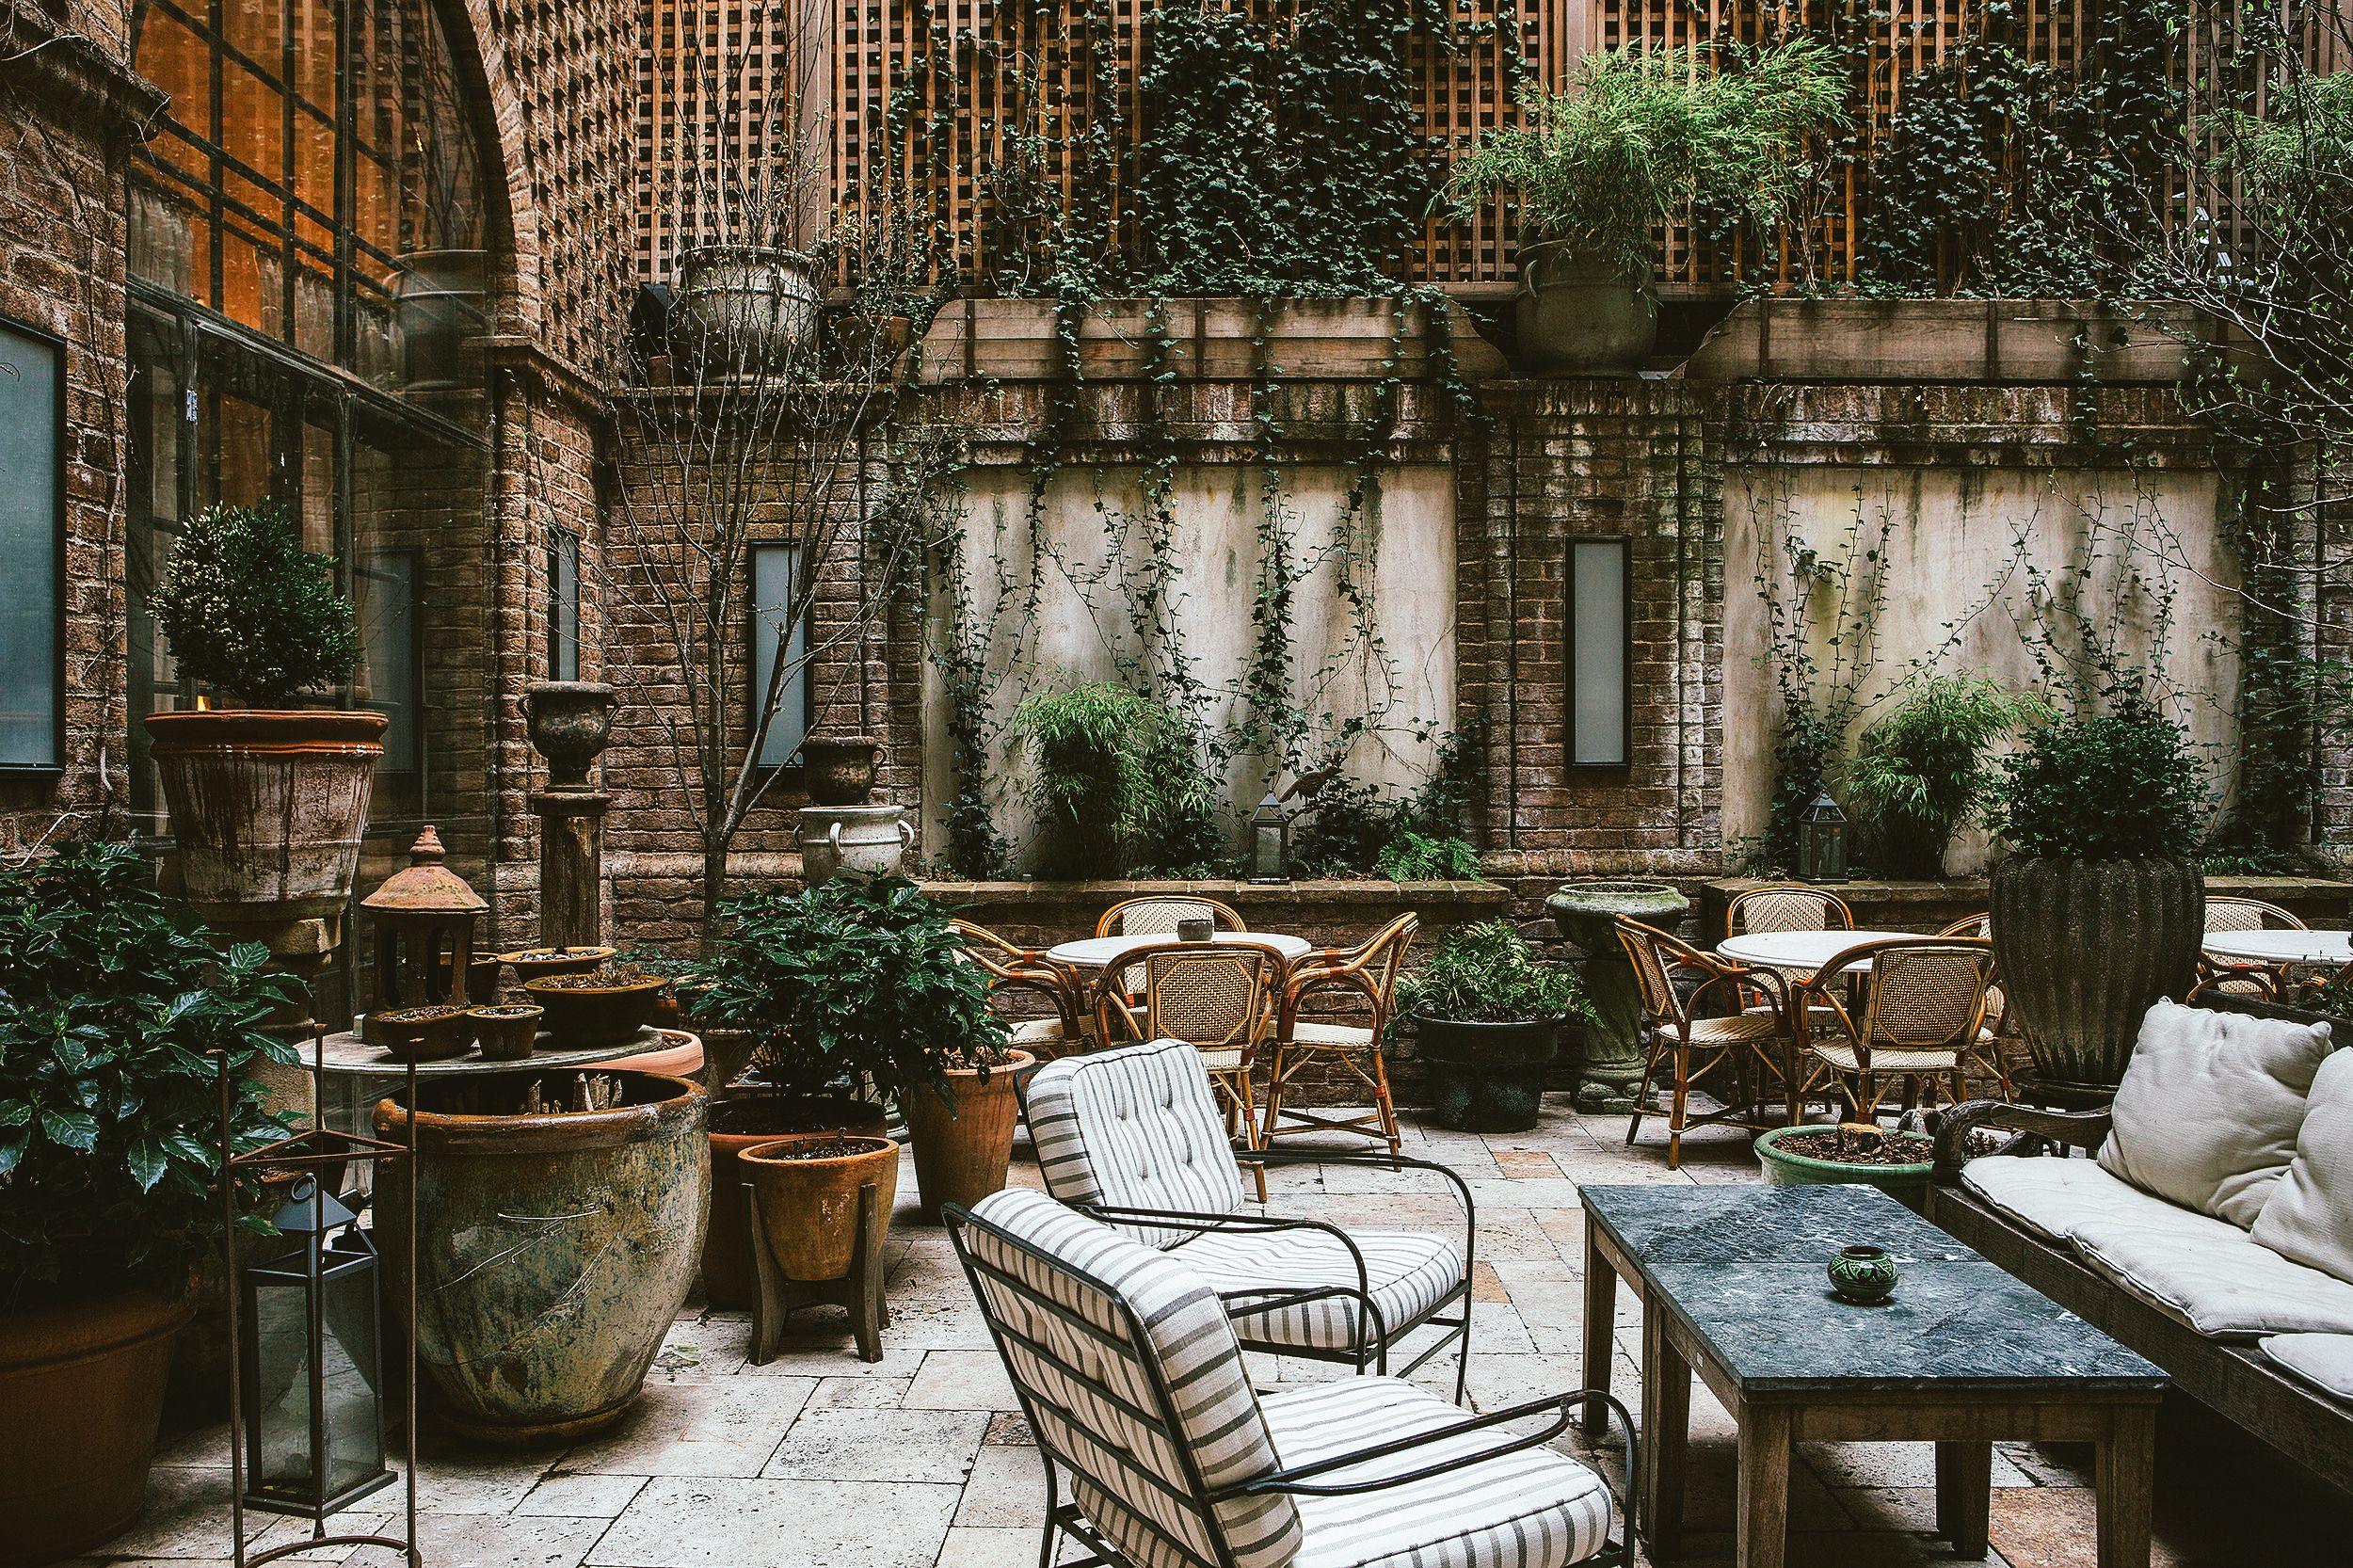 Jardín del hotel Greenwich Hotel Tribeca Penthouse, estilo natural japonés Wabi Sabi.